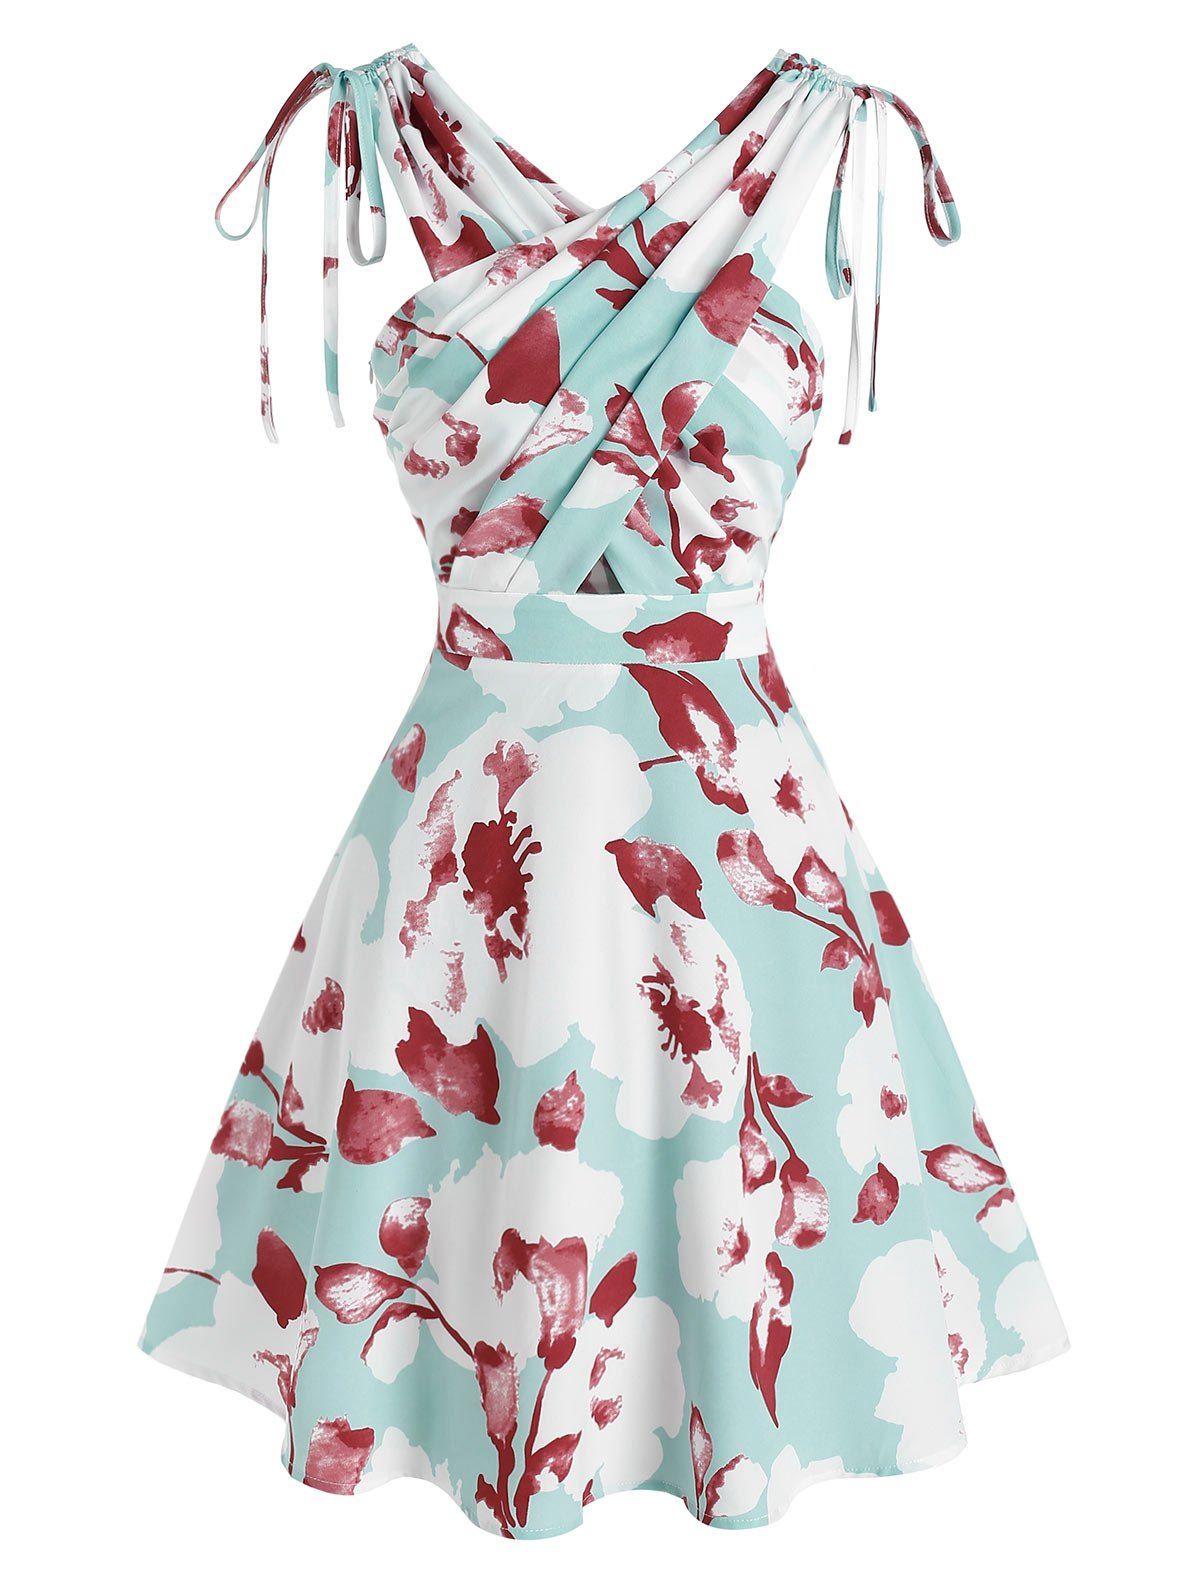 Summer Mini Dress Crisscross Cinched Tie Floral Print Cut Out Vacation A Line Dress - LIGHT BLUE M